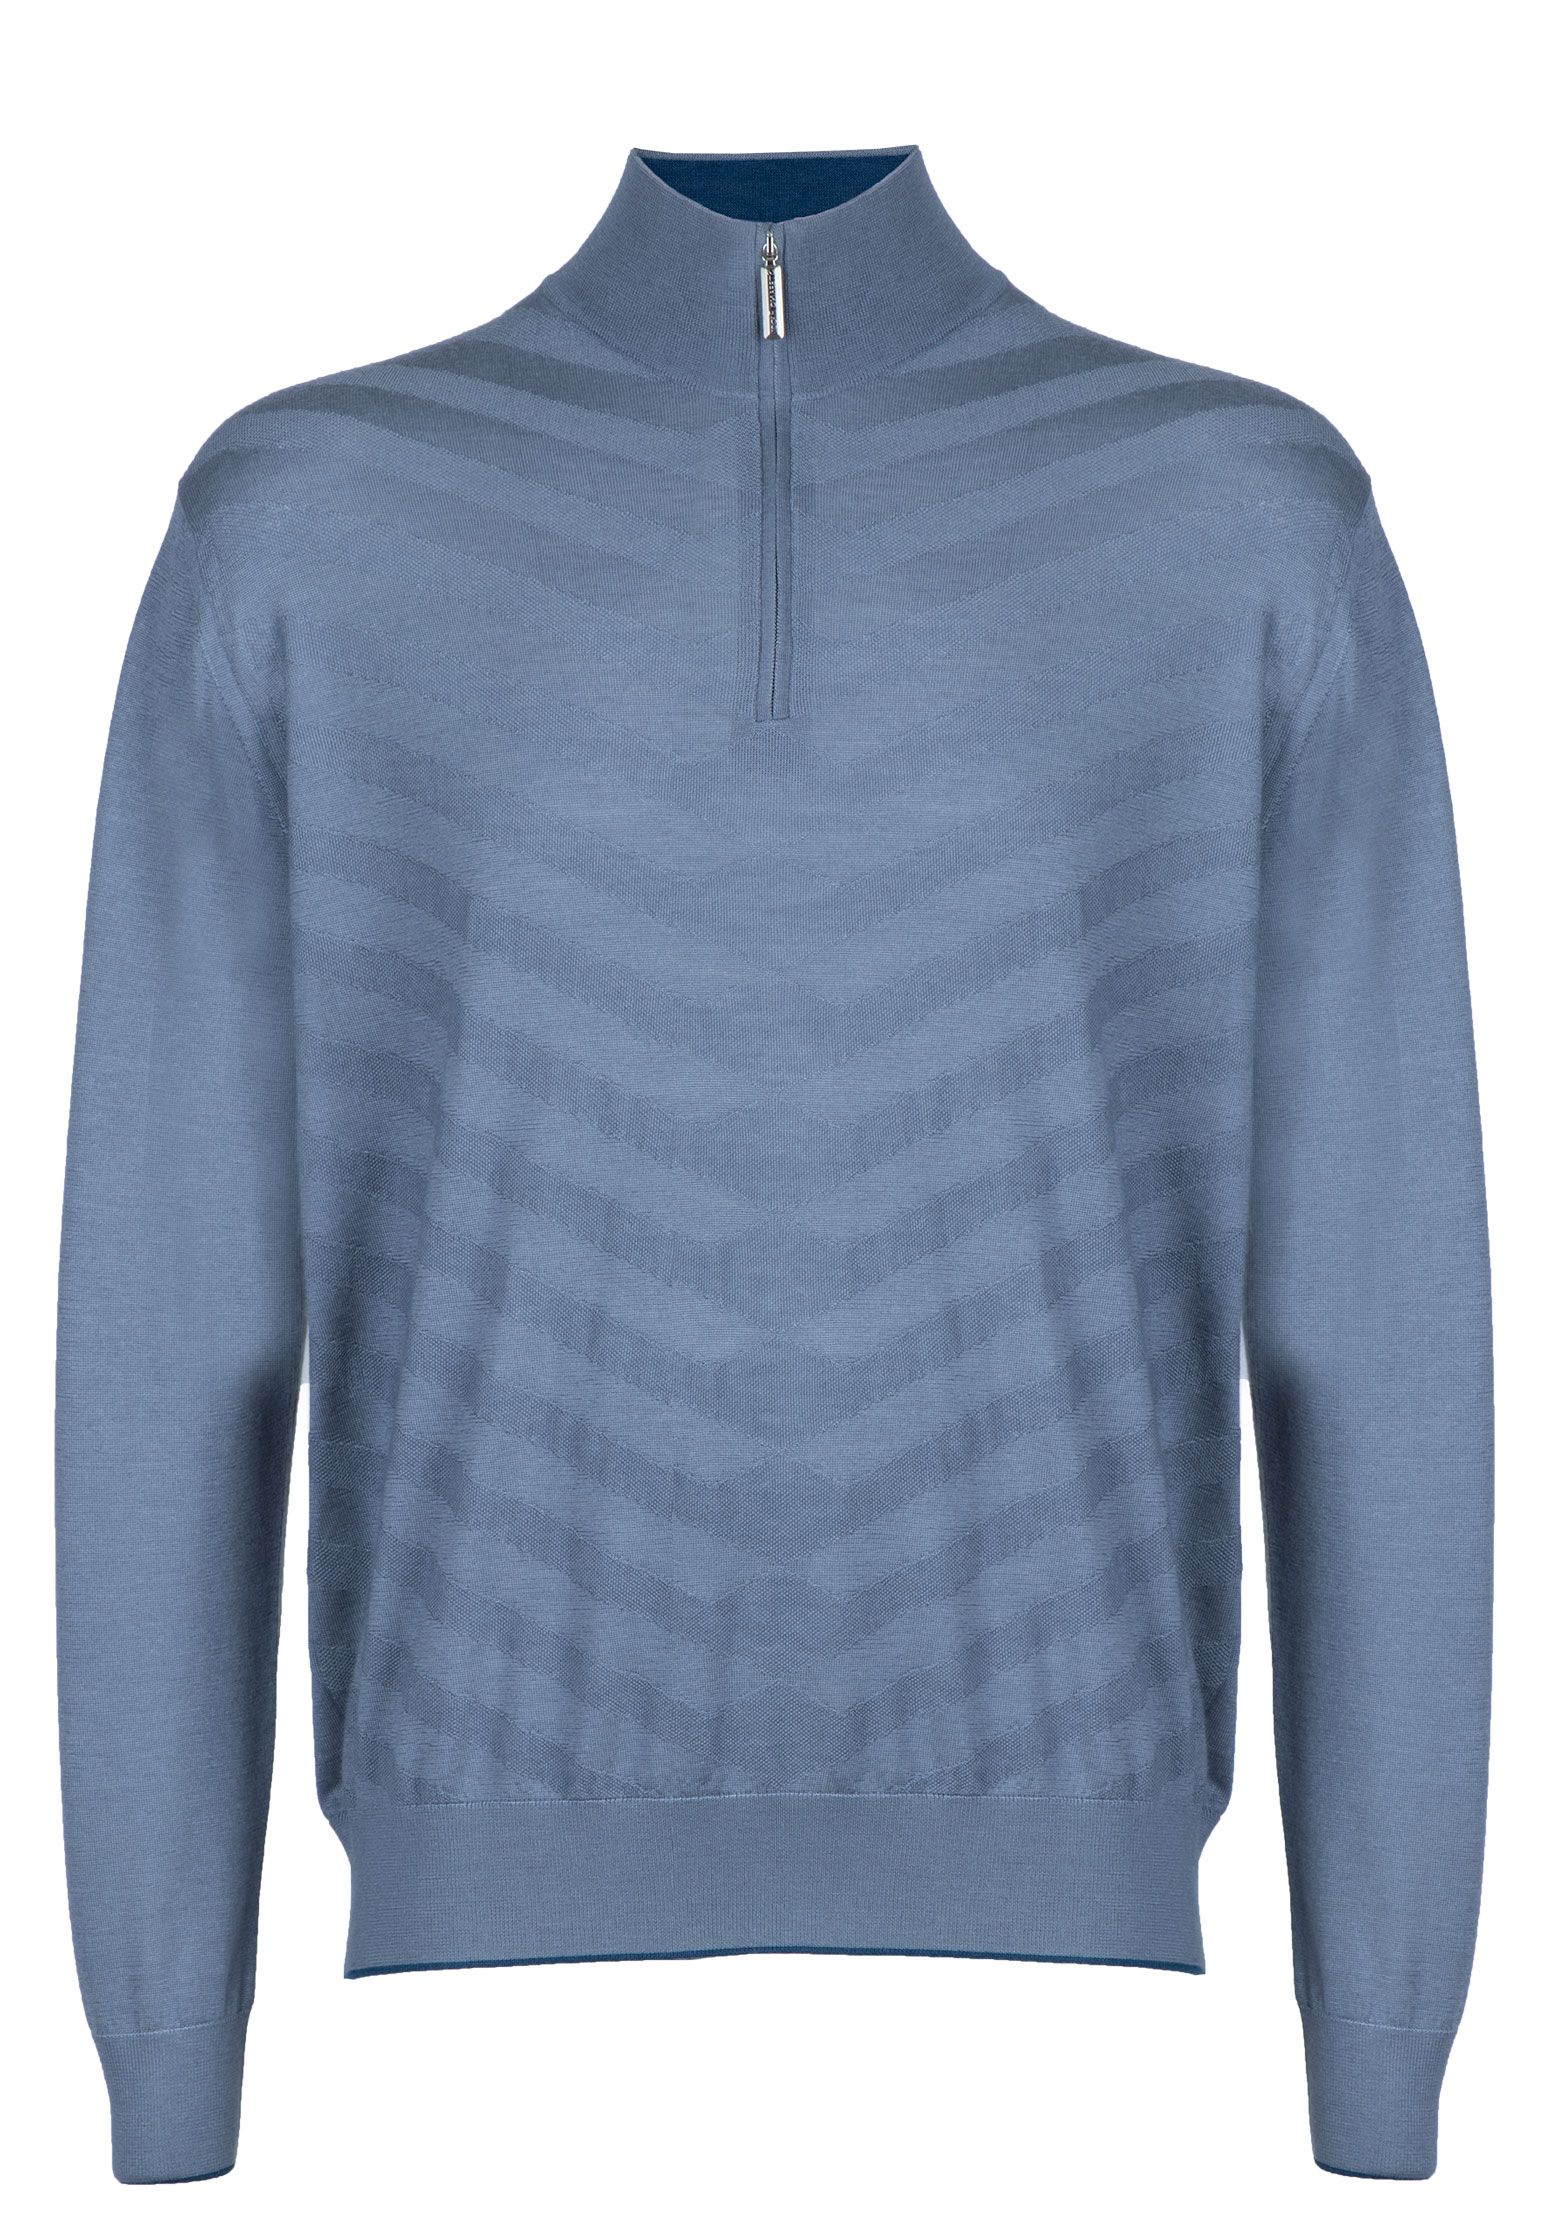 Sweater STEFANO RICCI Color: grey (Code: 284) in online store Allure